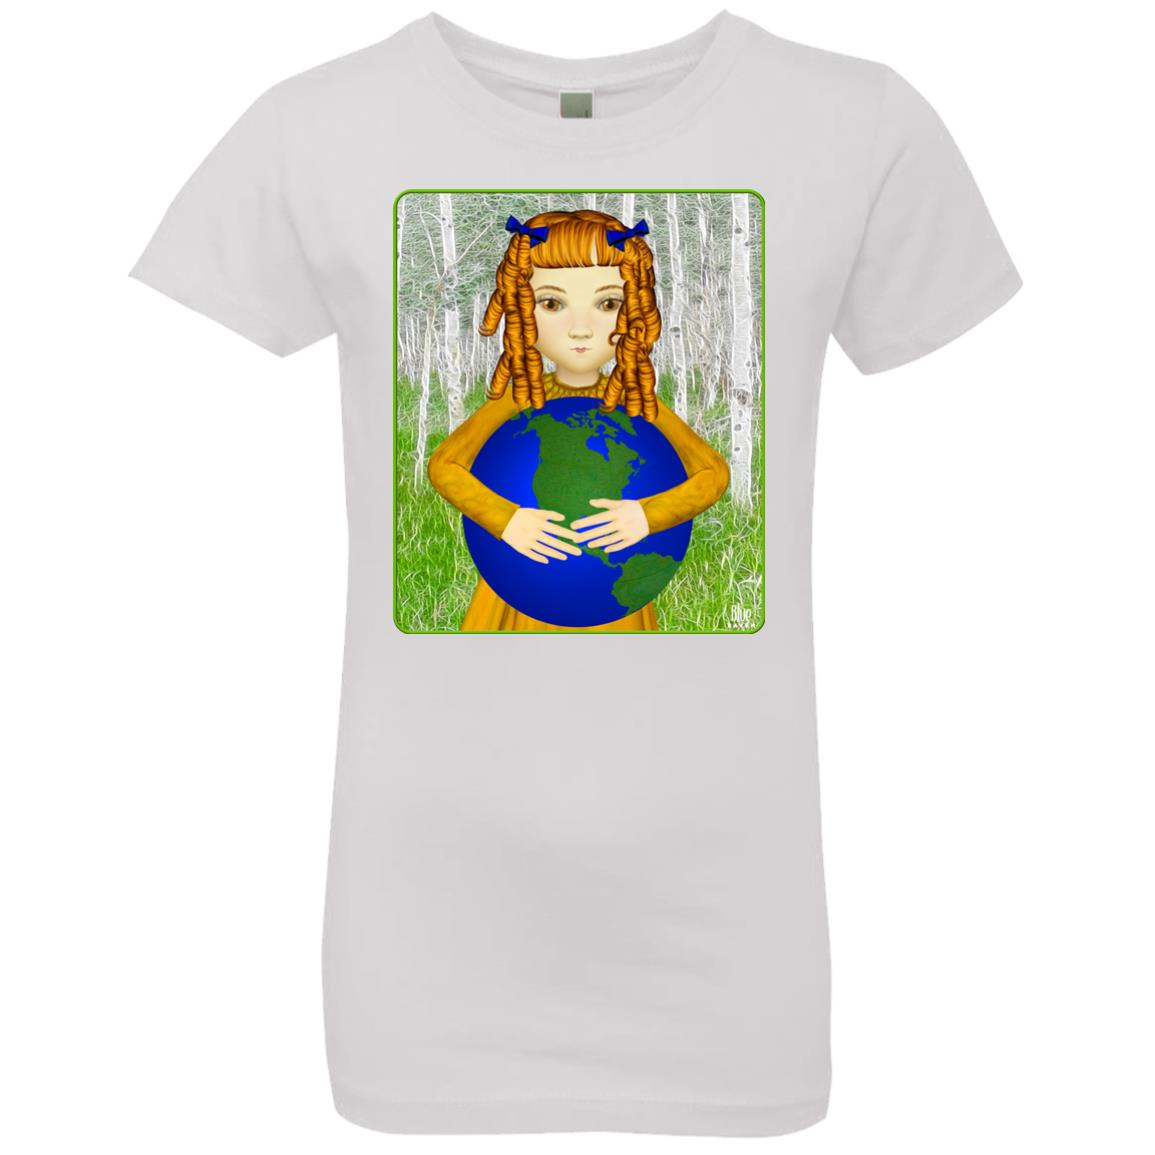 Save My World - Girl's Premium Cotton T-Shirt